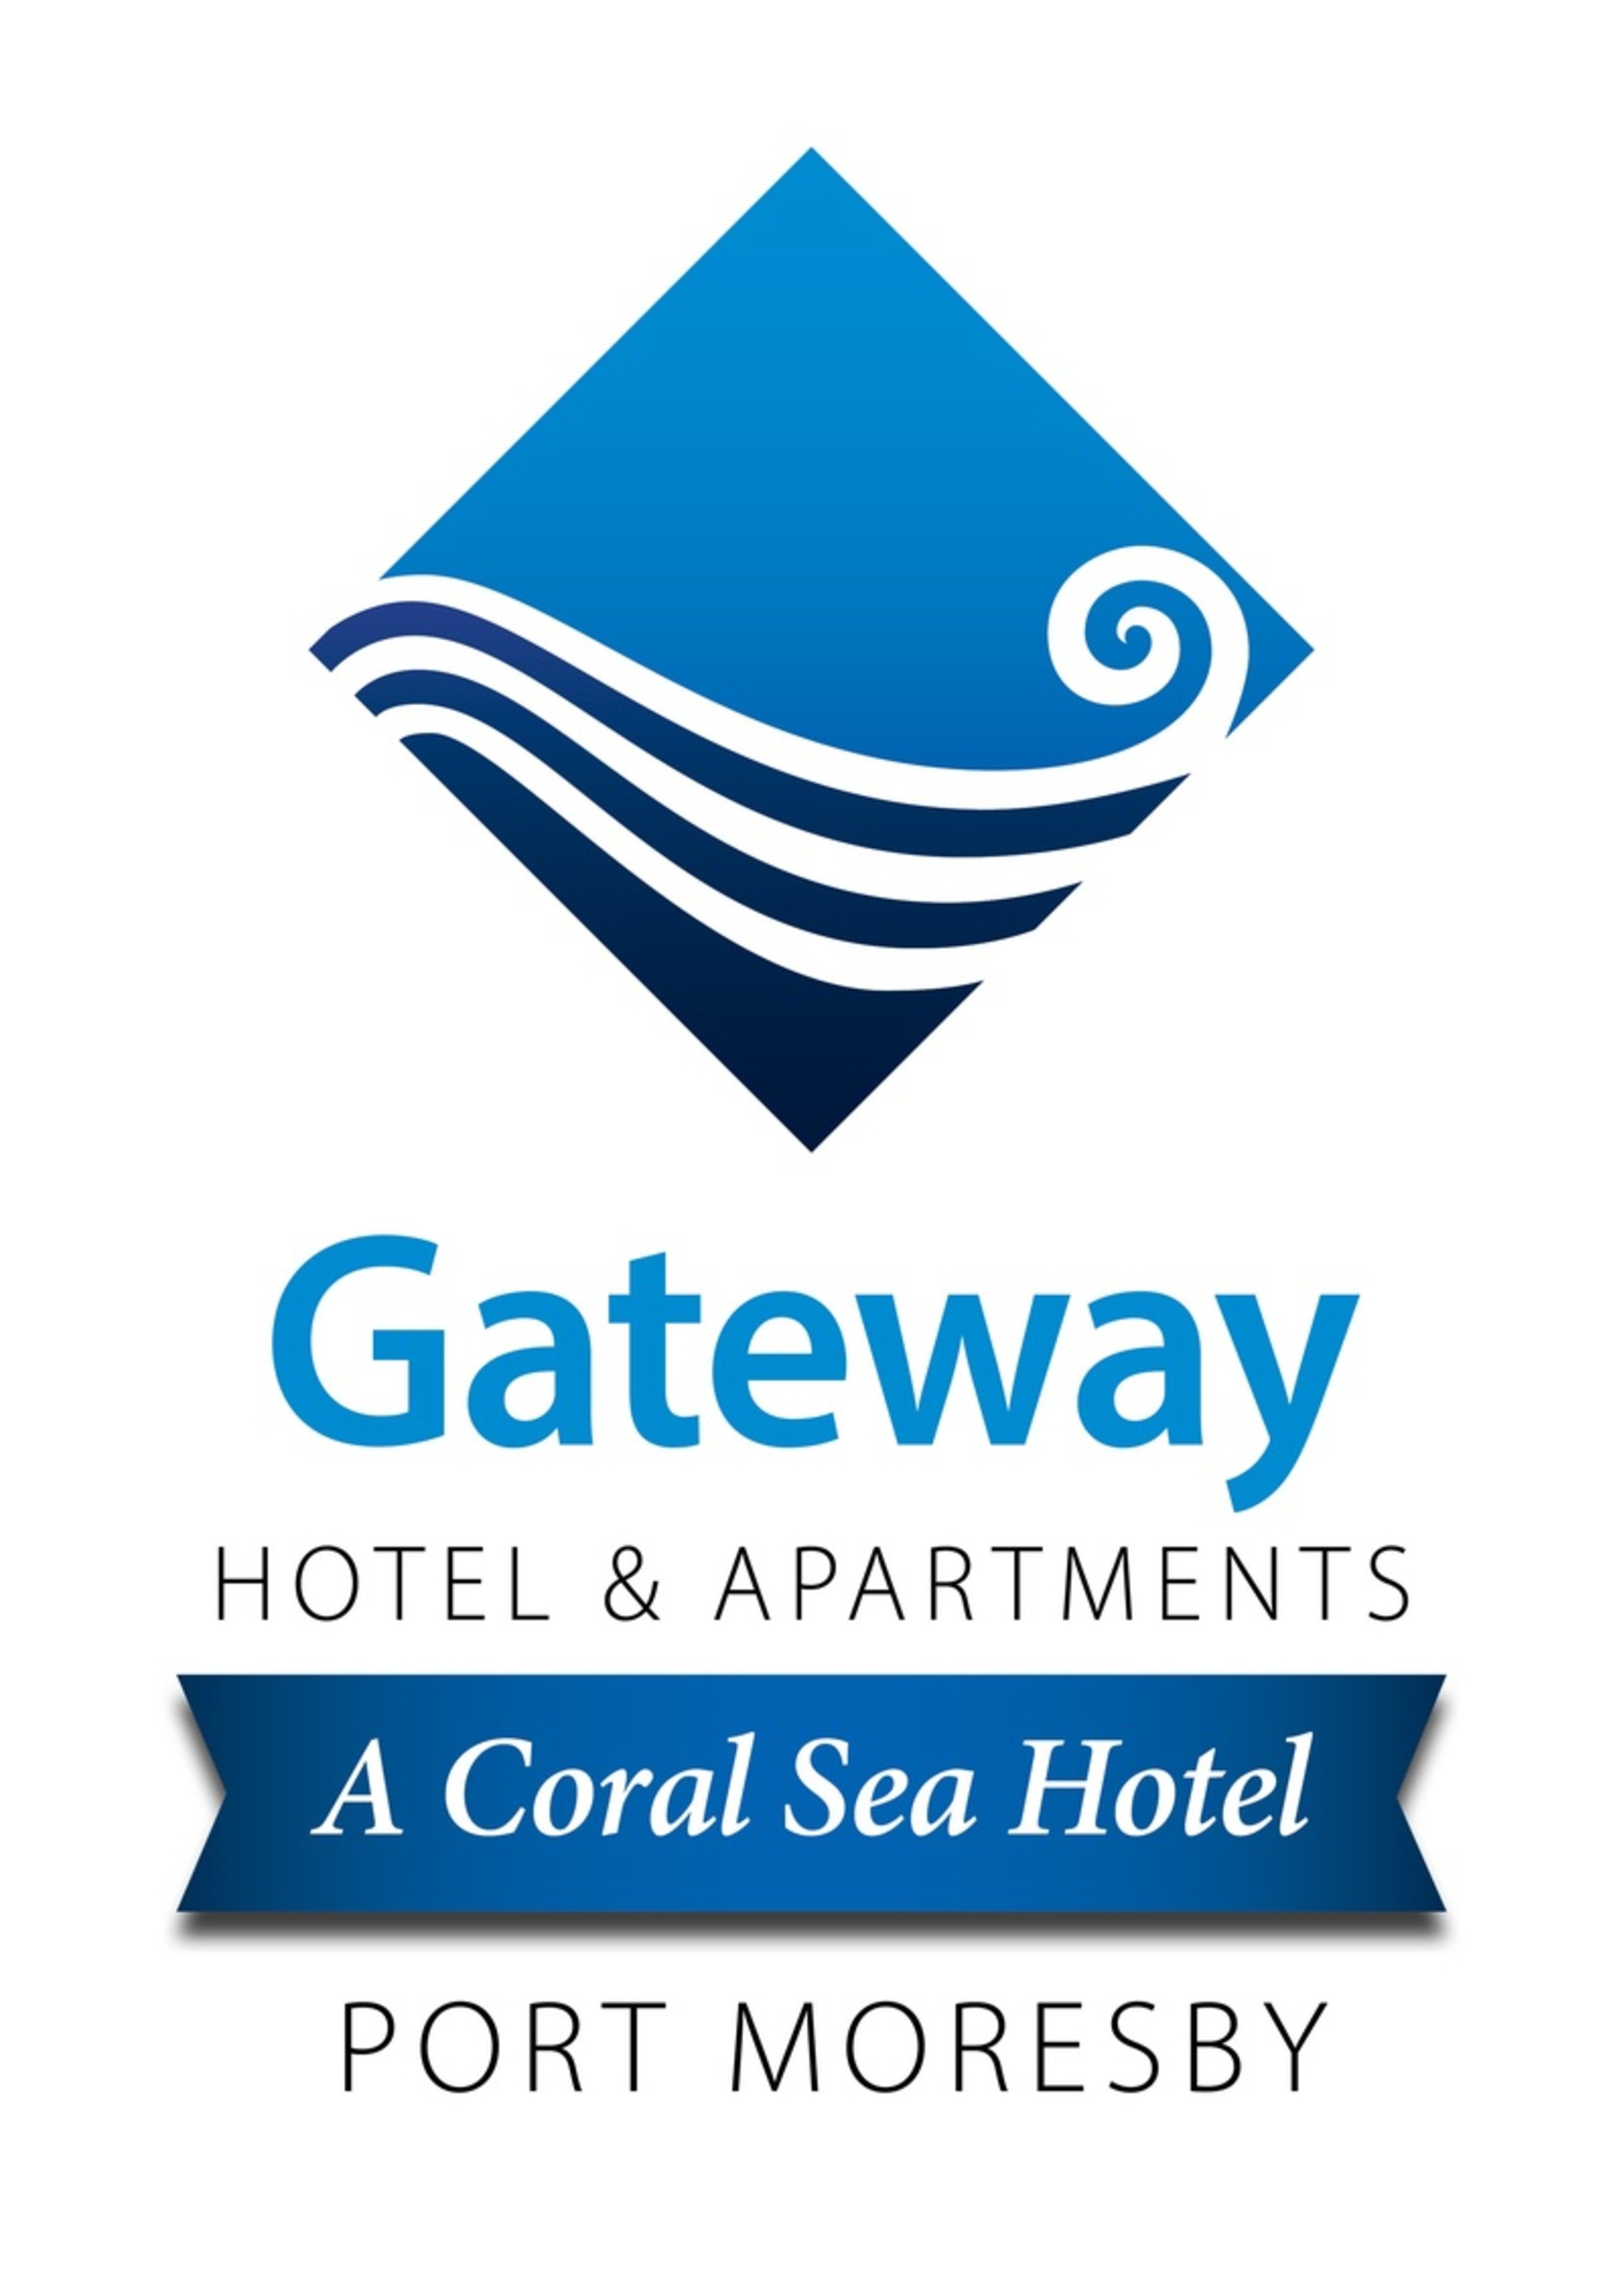 Gateway Hotel & Apartments